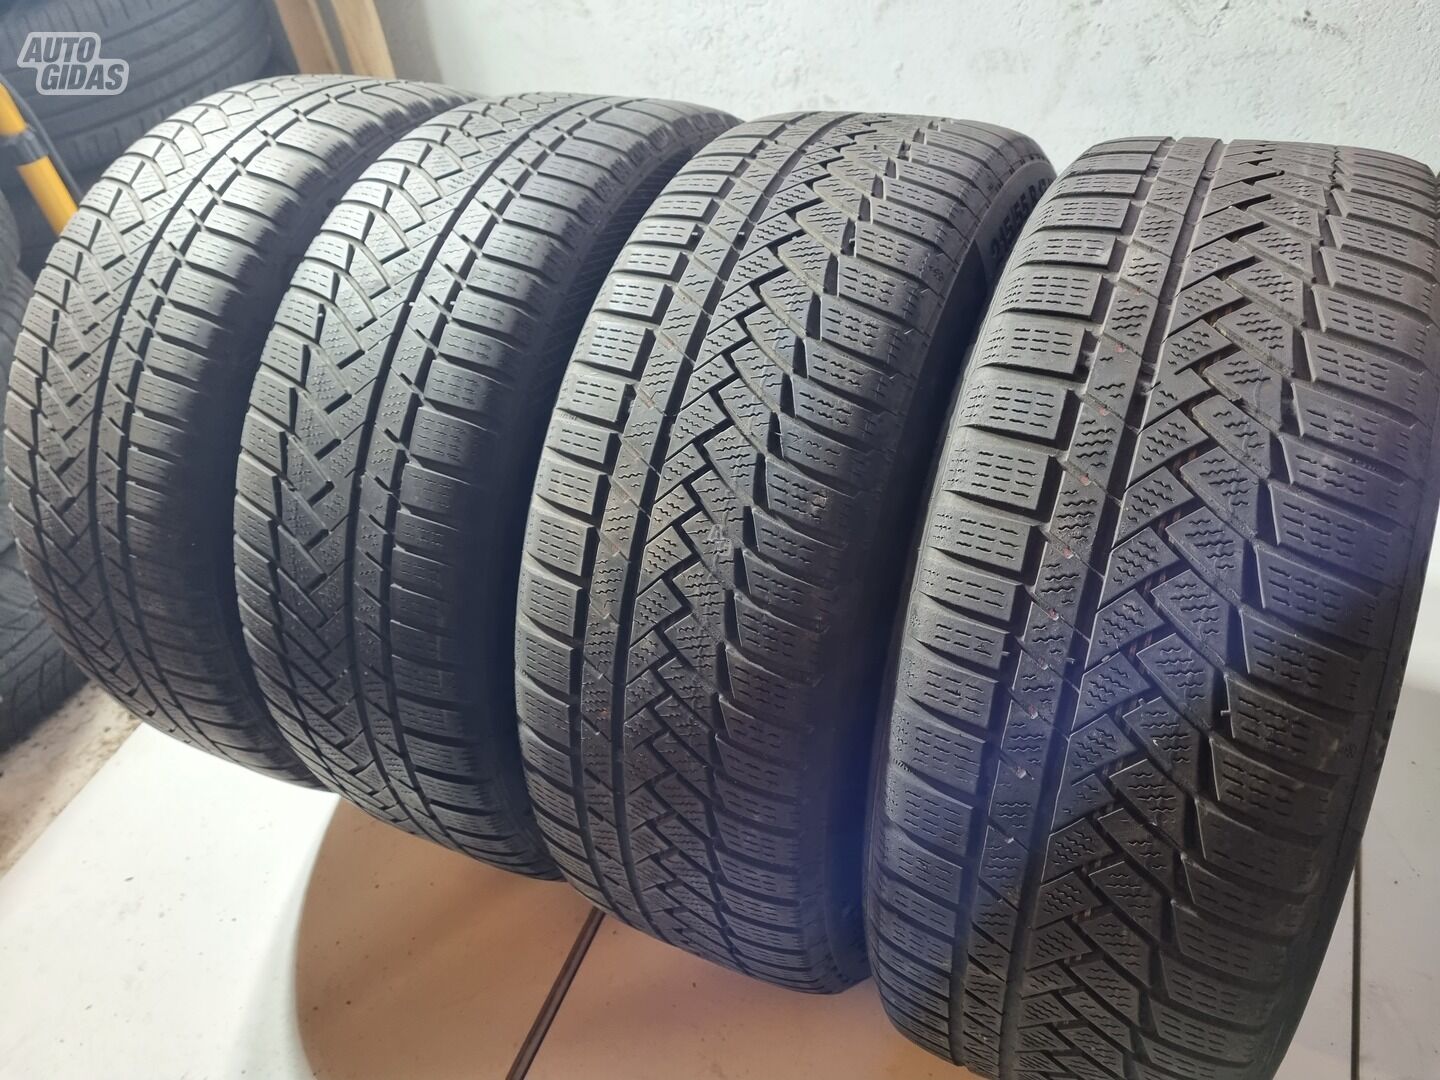 Continental 4-5mm, 2019m R17 winter tyres passanger car